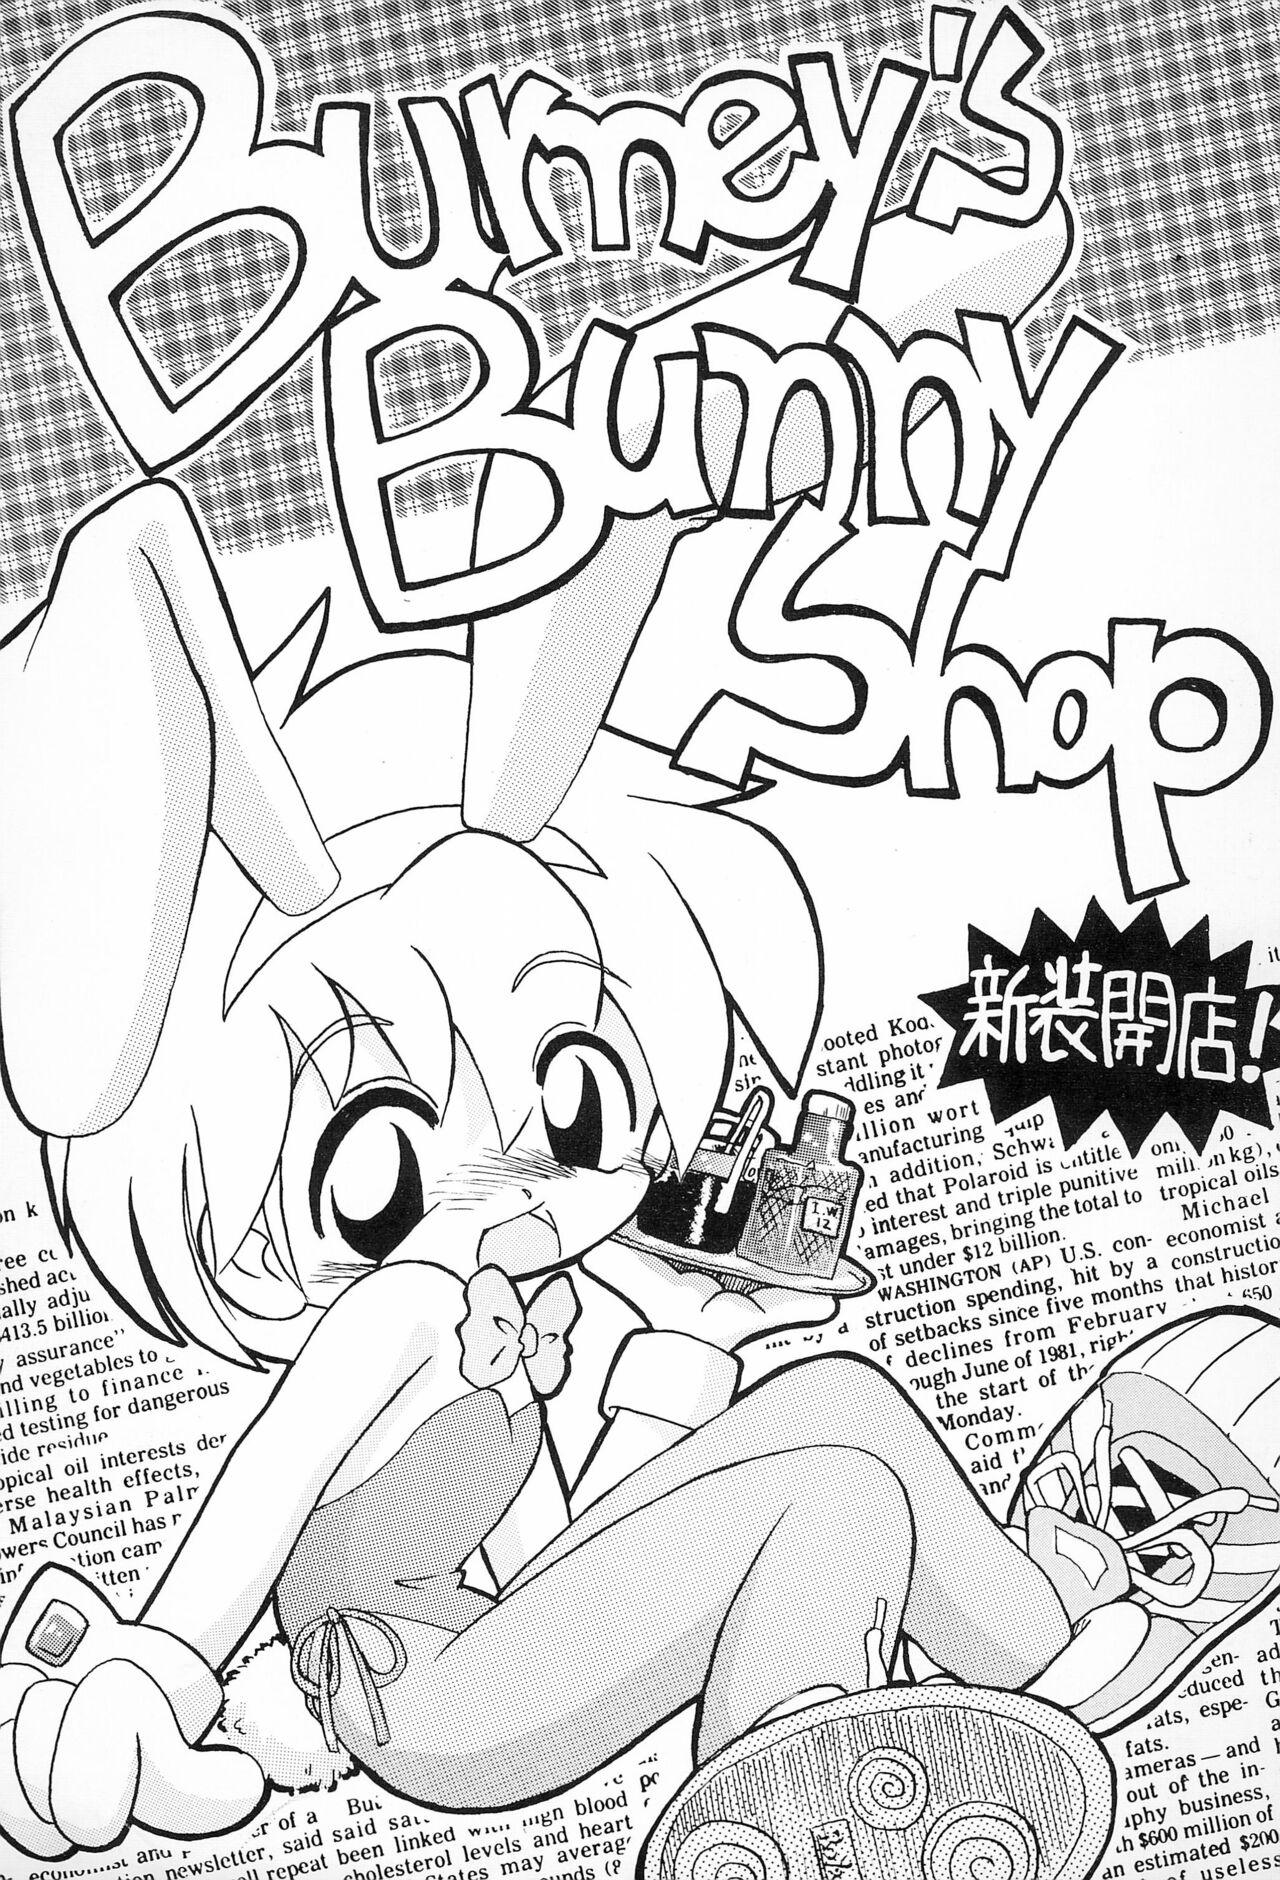 Burney’s Bunny Shop Shinsoukaiten! 0